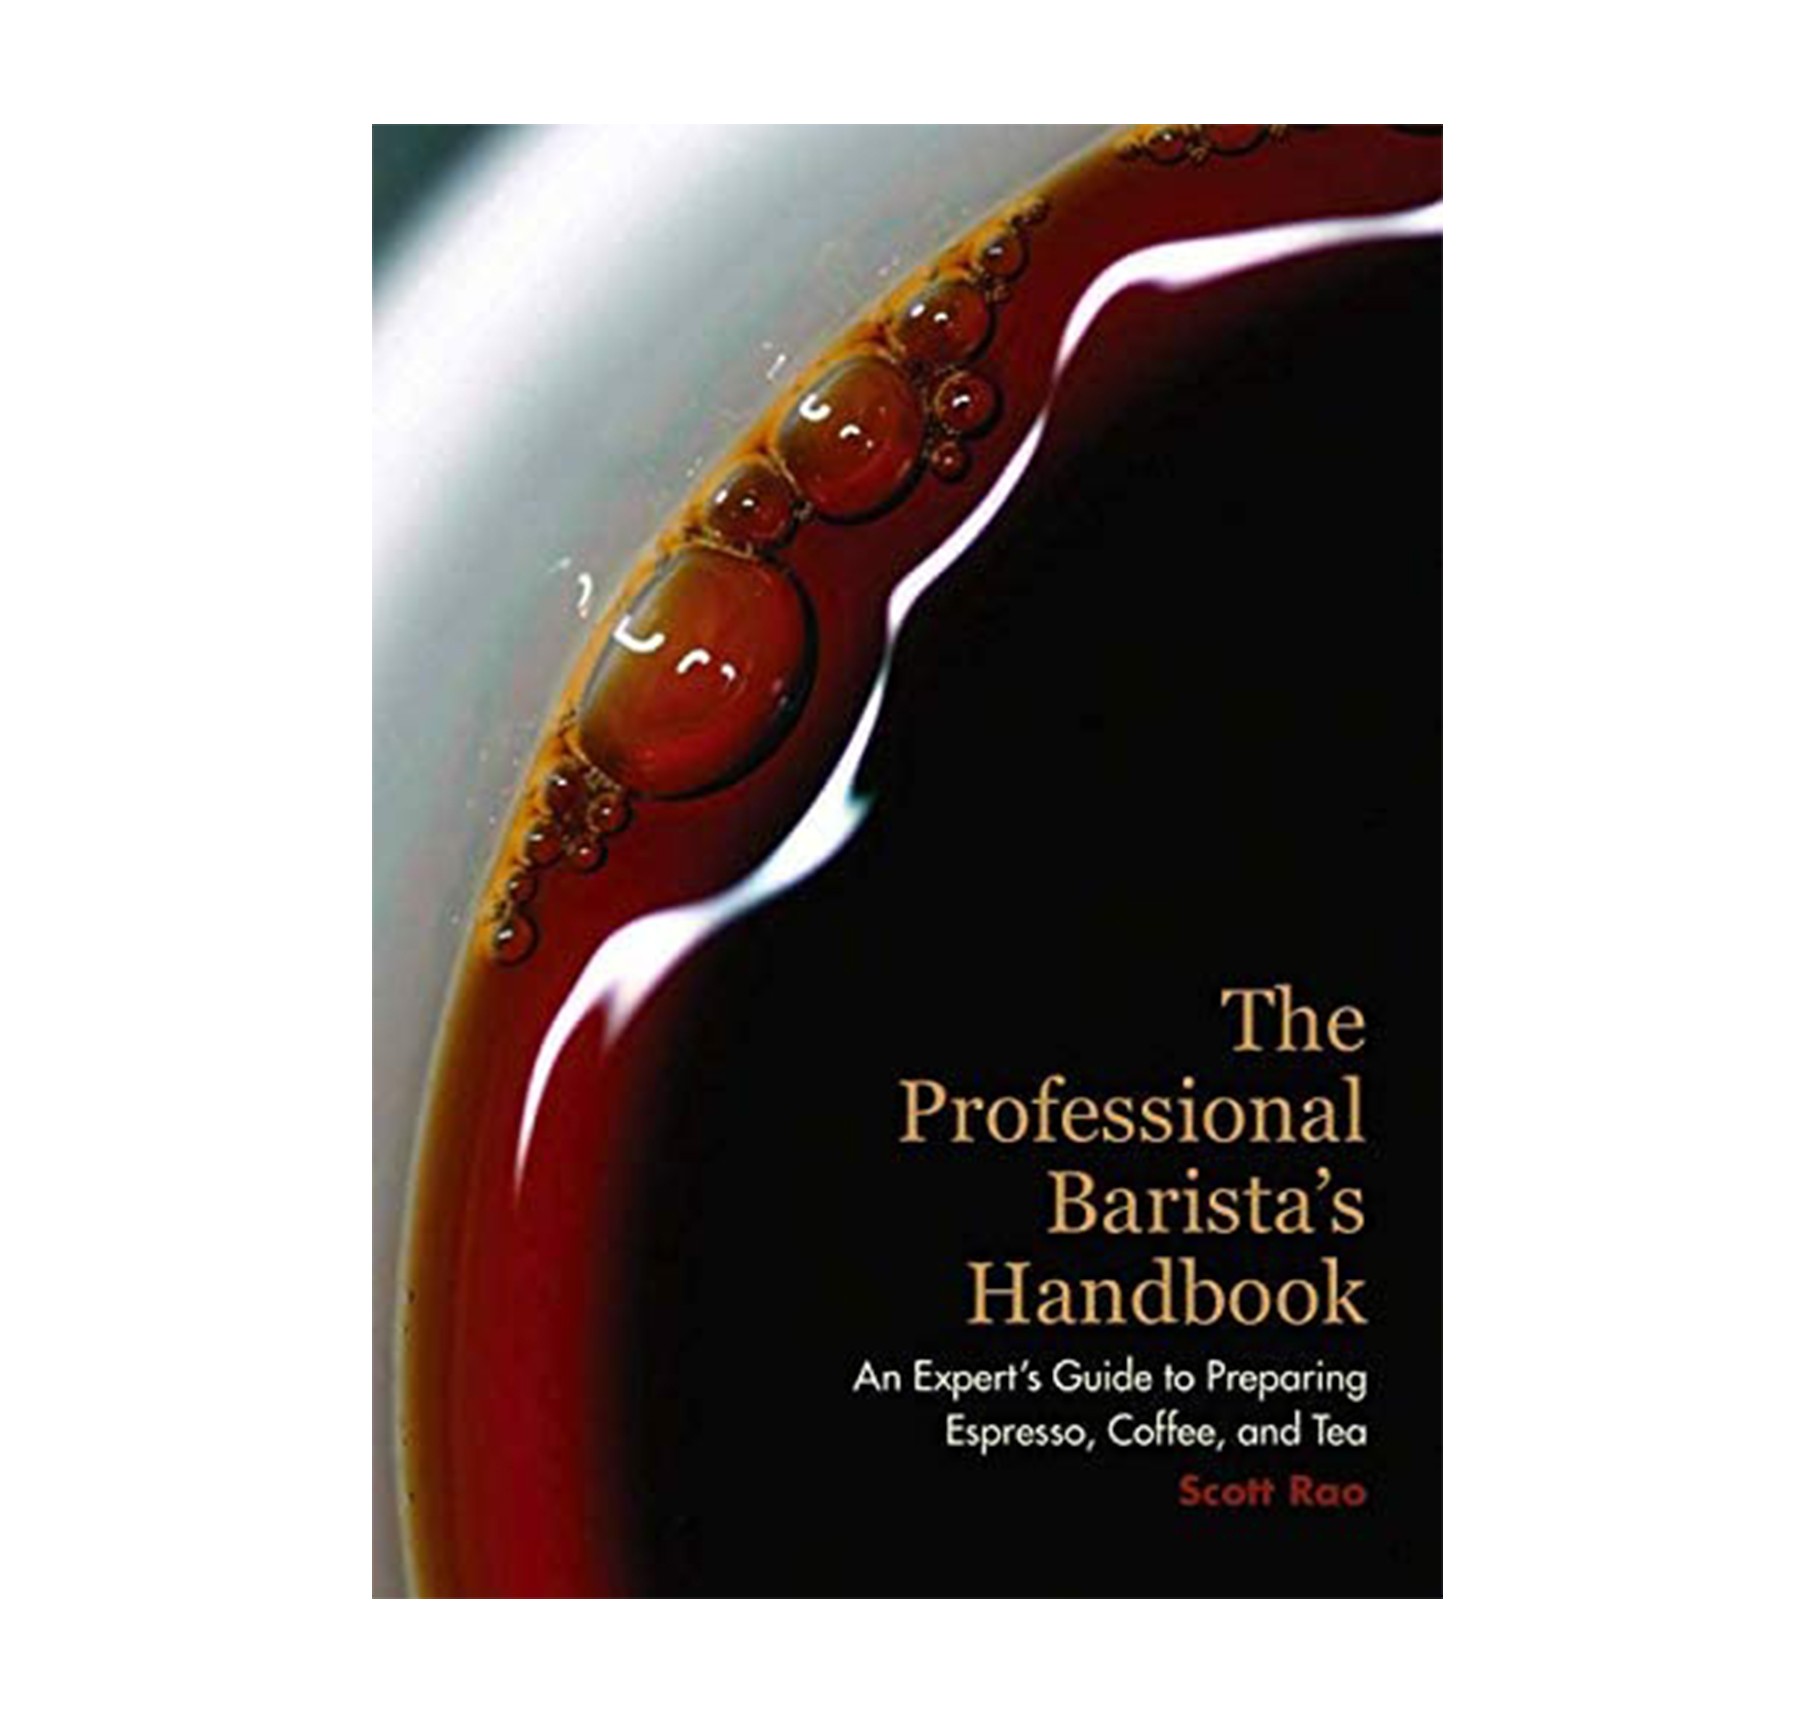 The Professional Barista’s Handbook